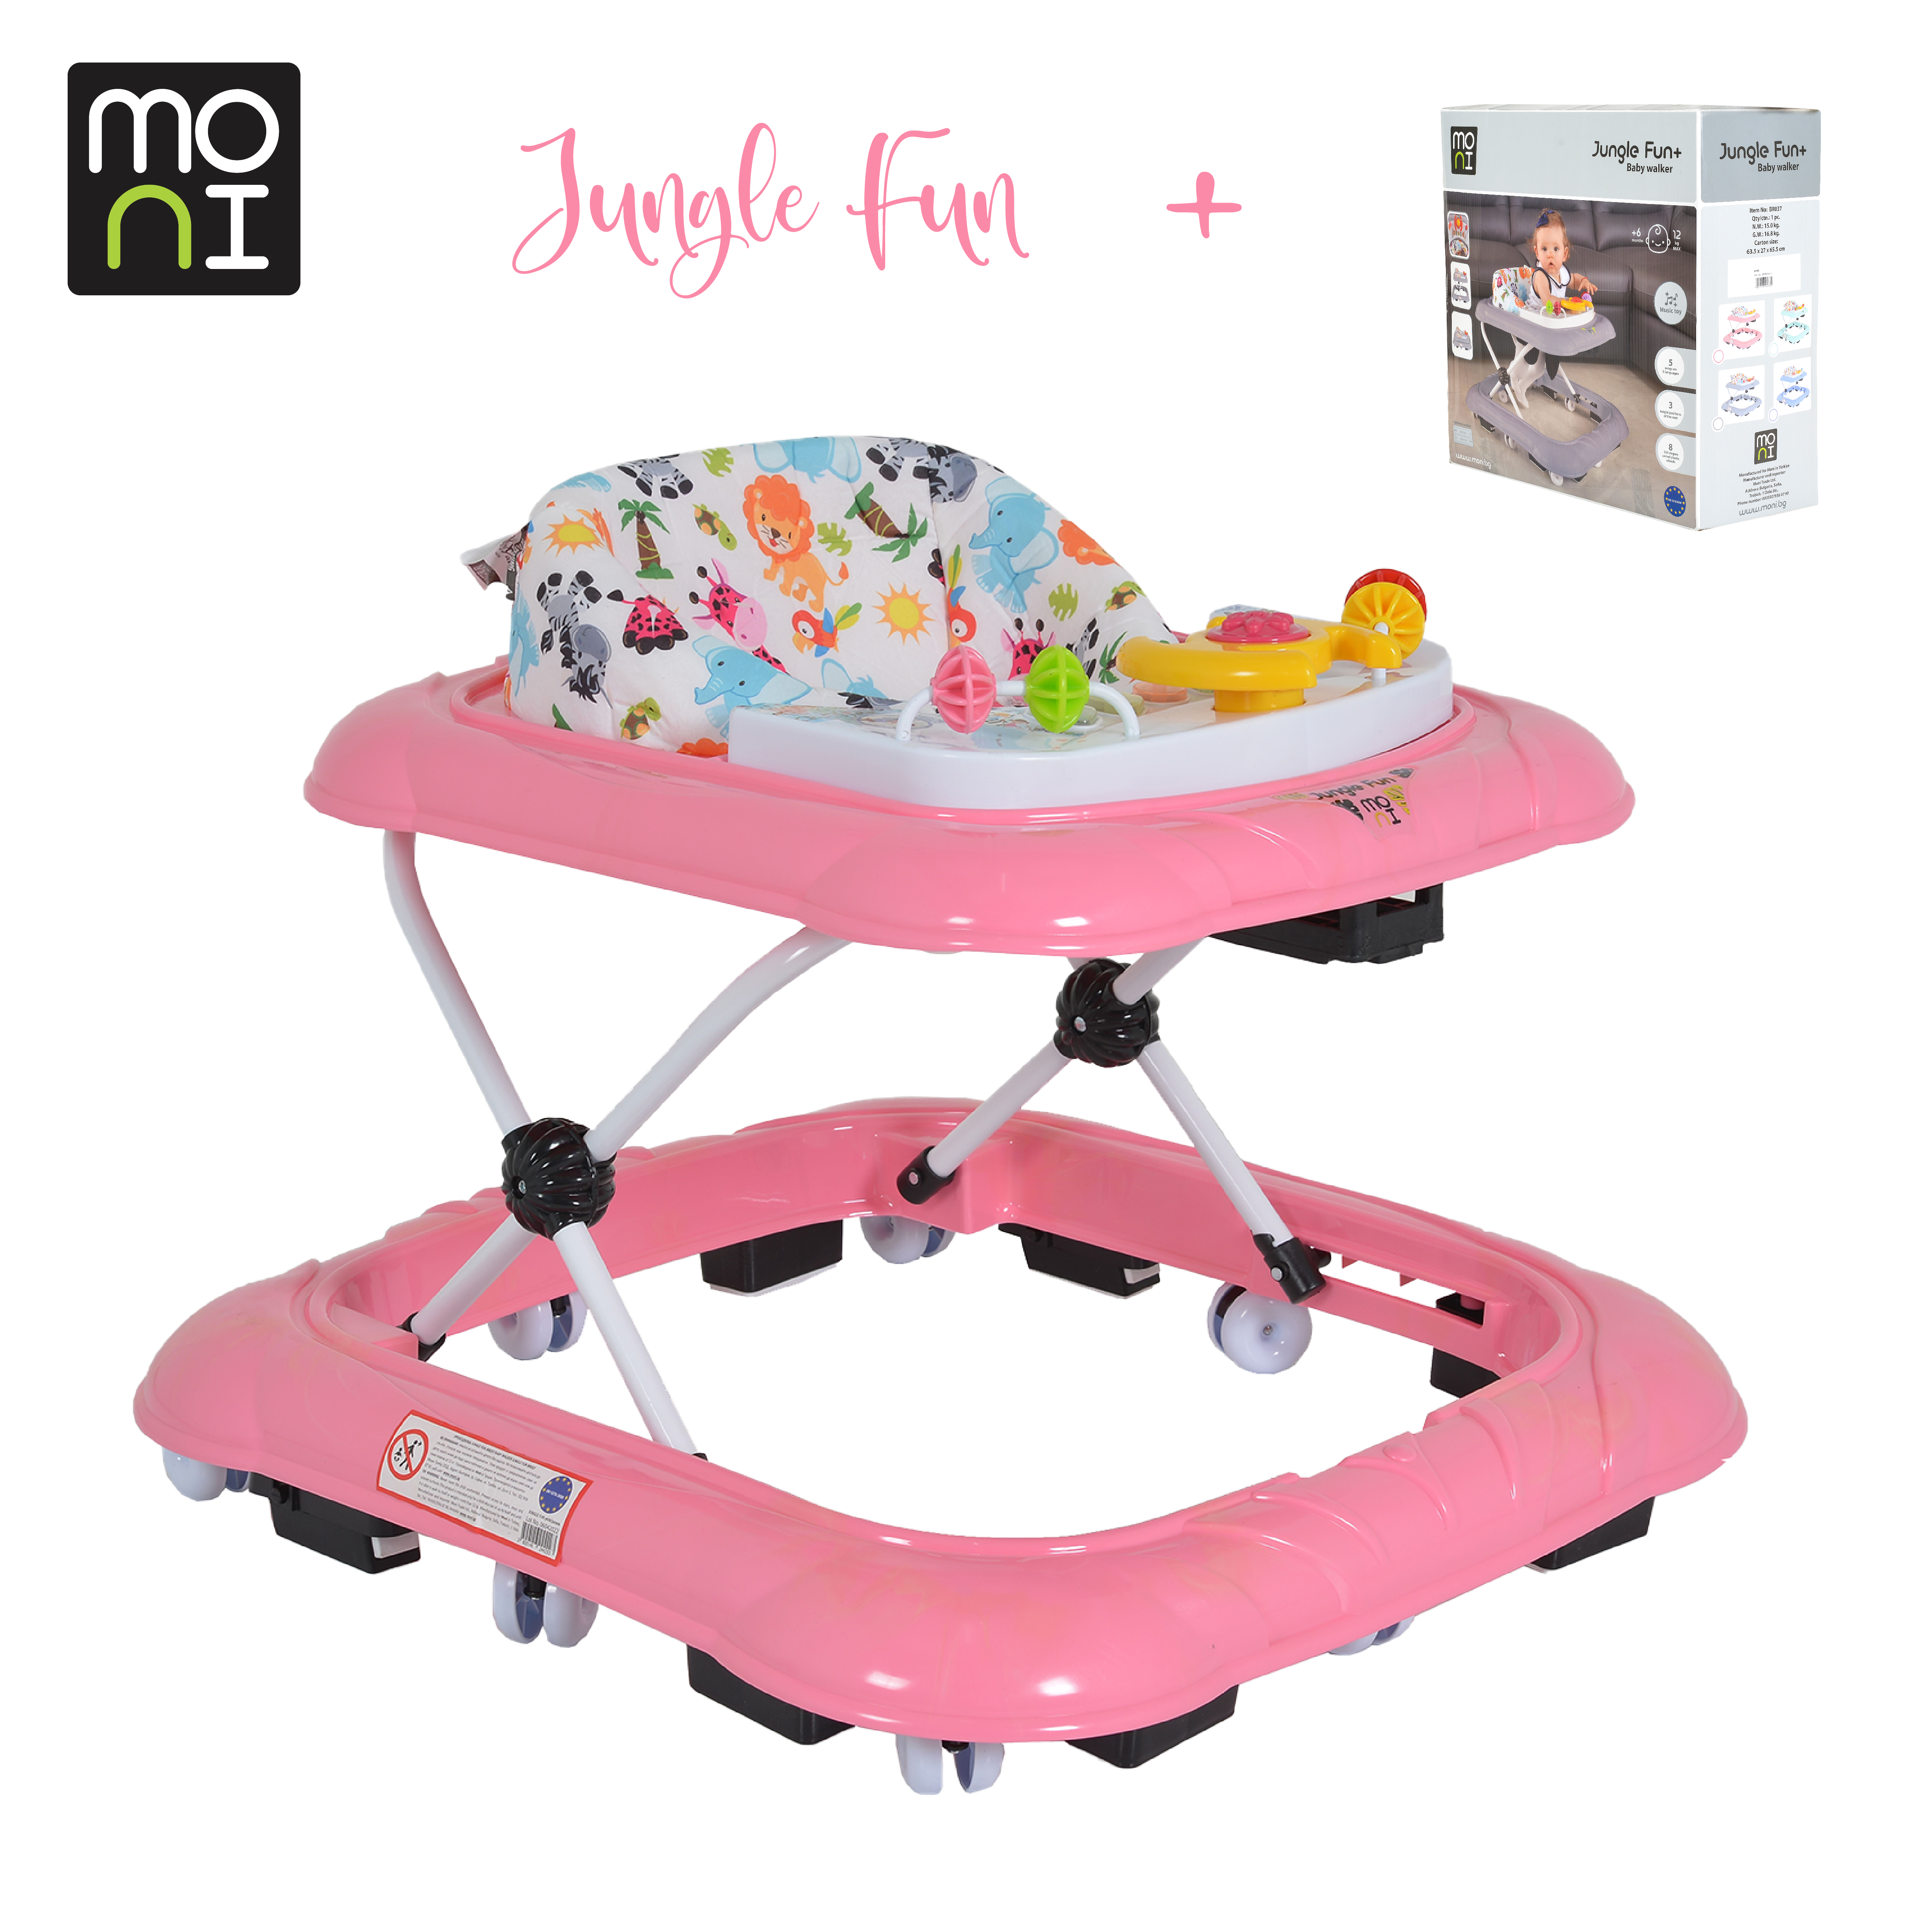 Moni Baby walker Jungle fun + pink 3800146244385